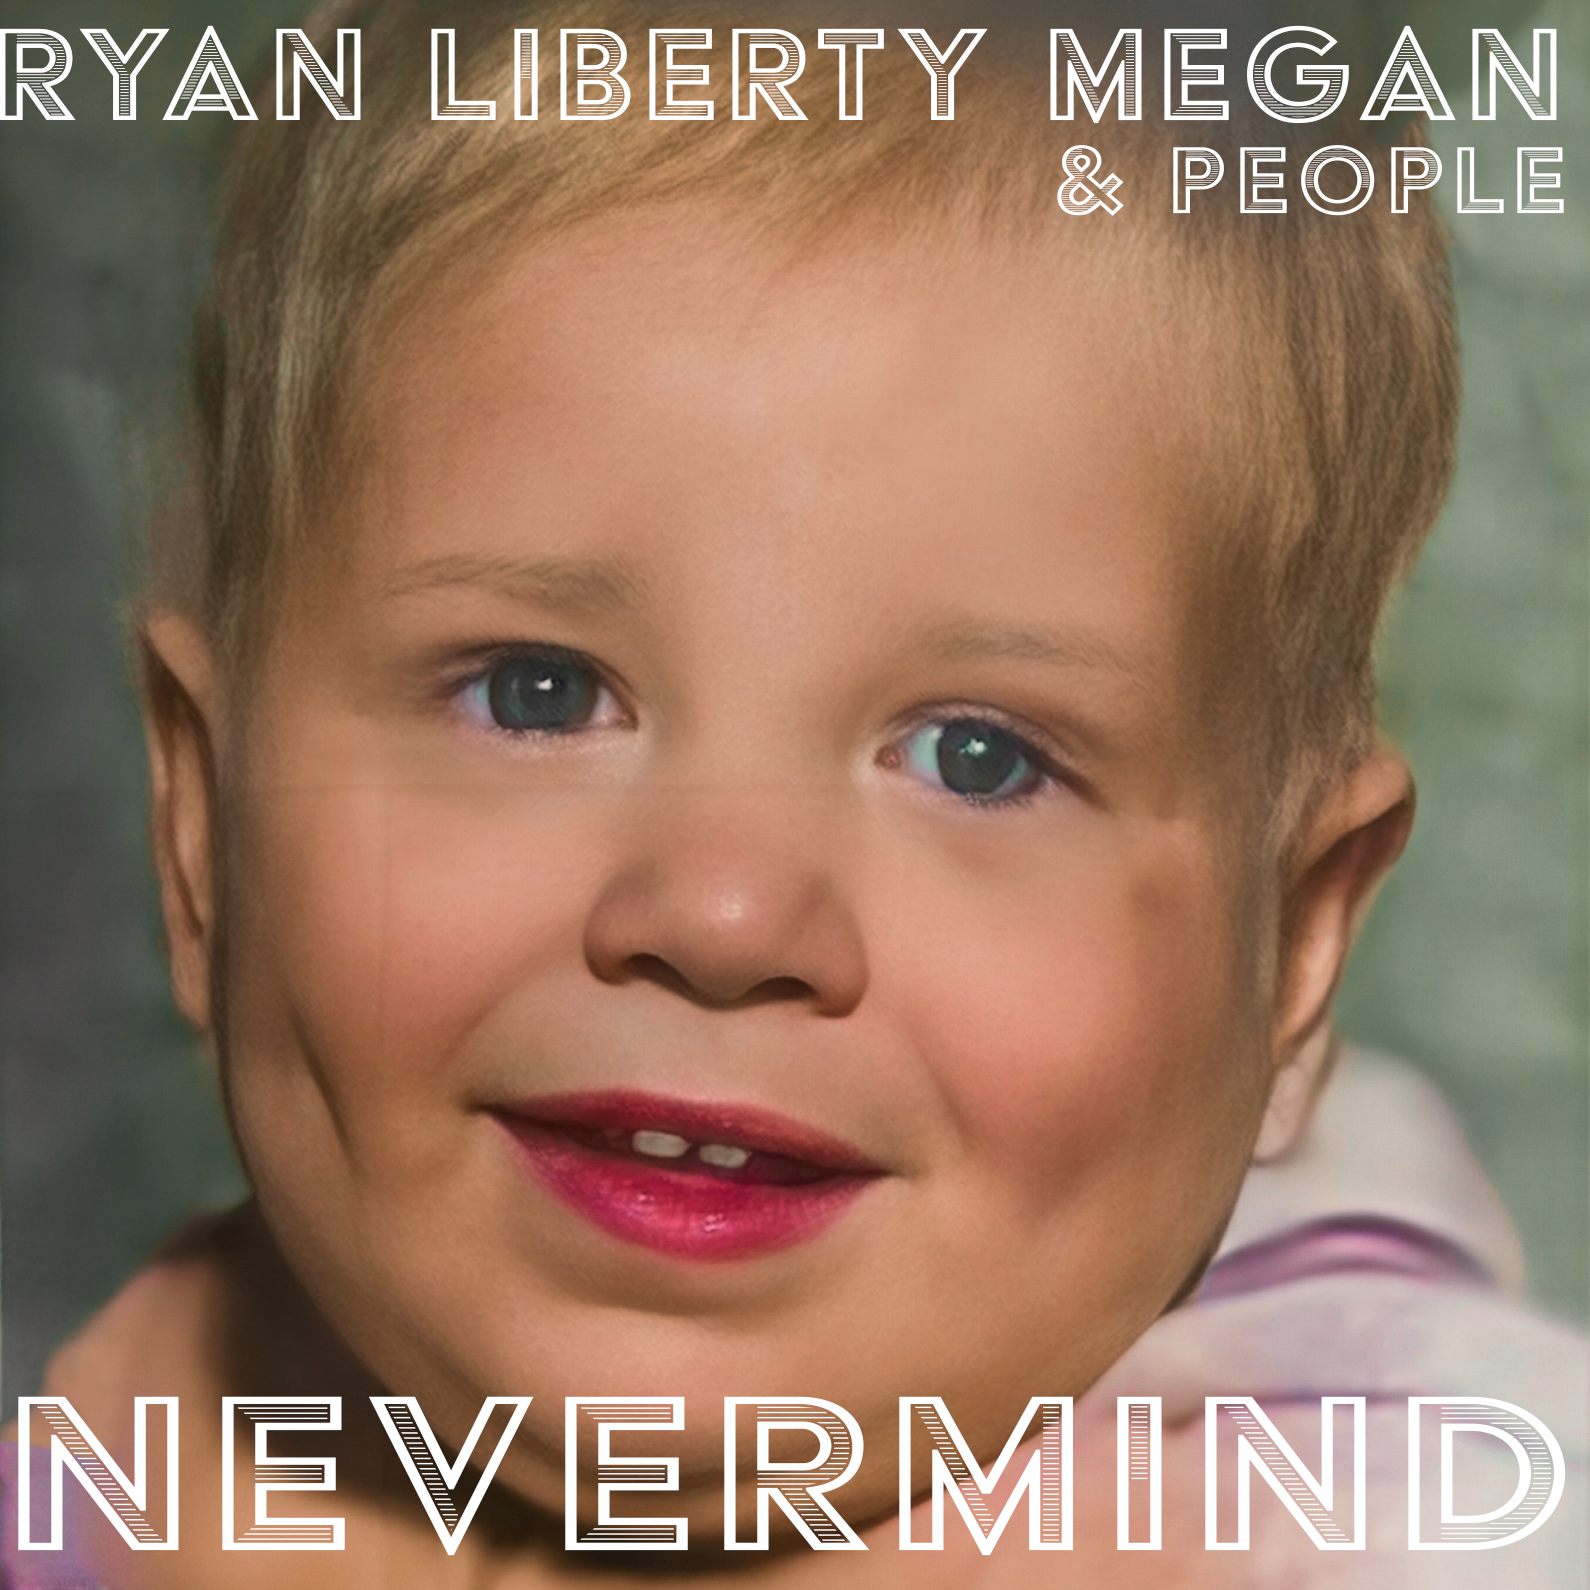 Ryan Liberty Megan “Nevermind” single artwork